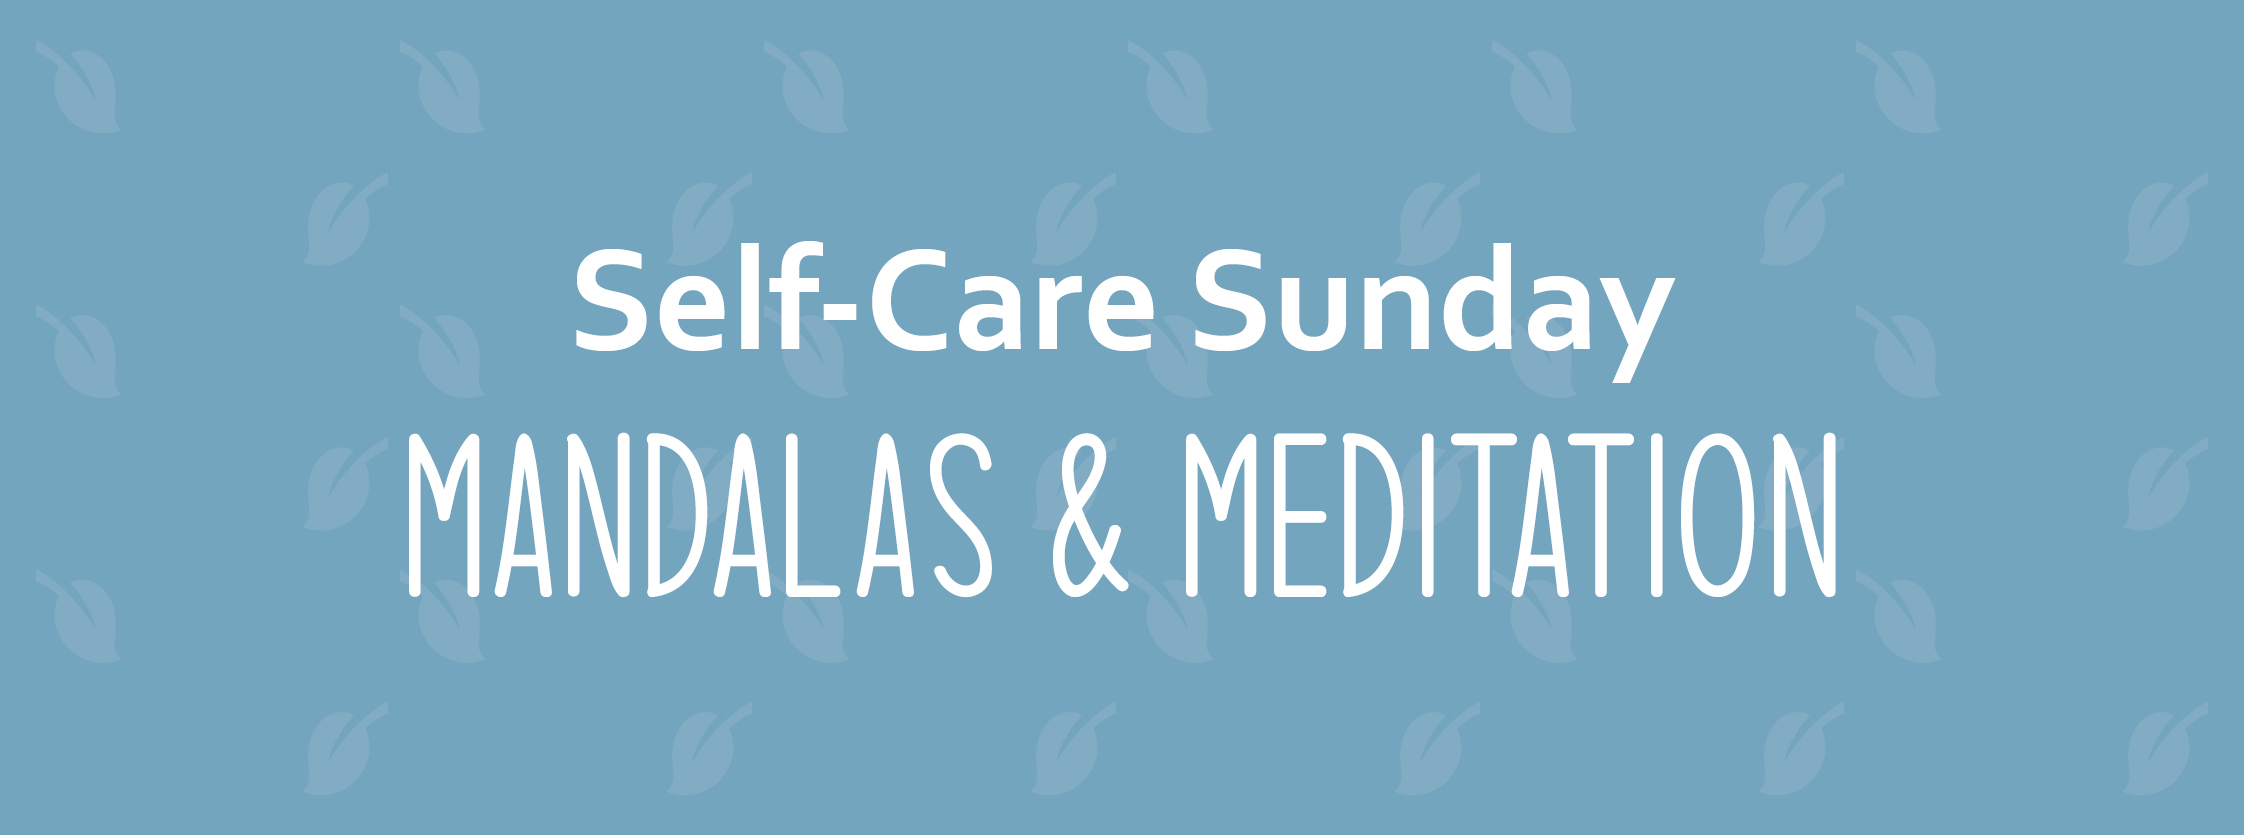 Self-Care Sunday | Making Mandalas